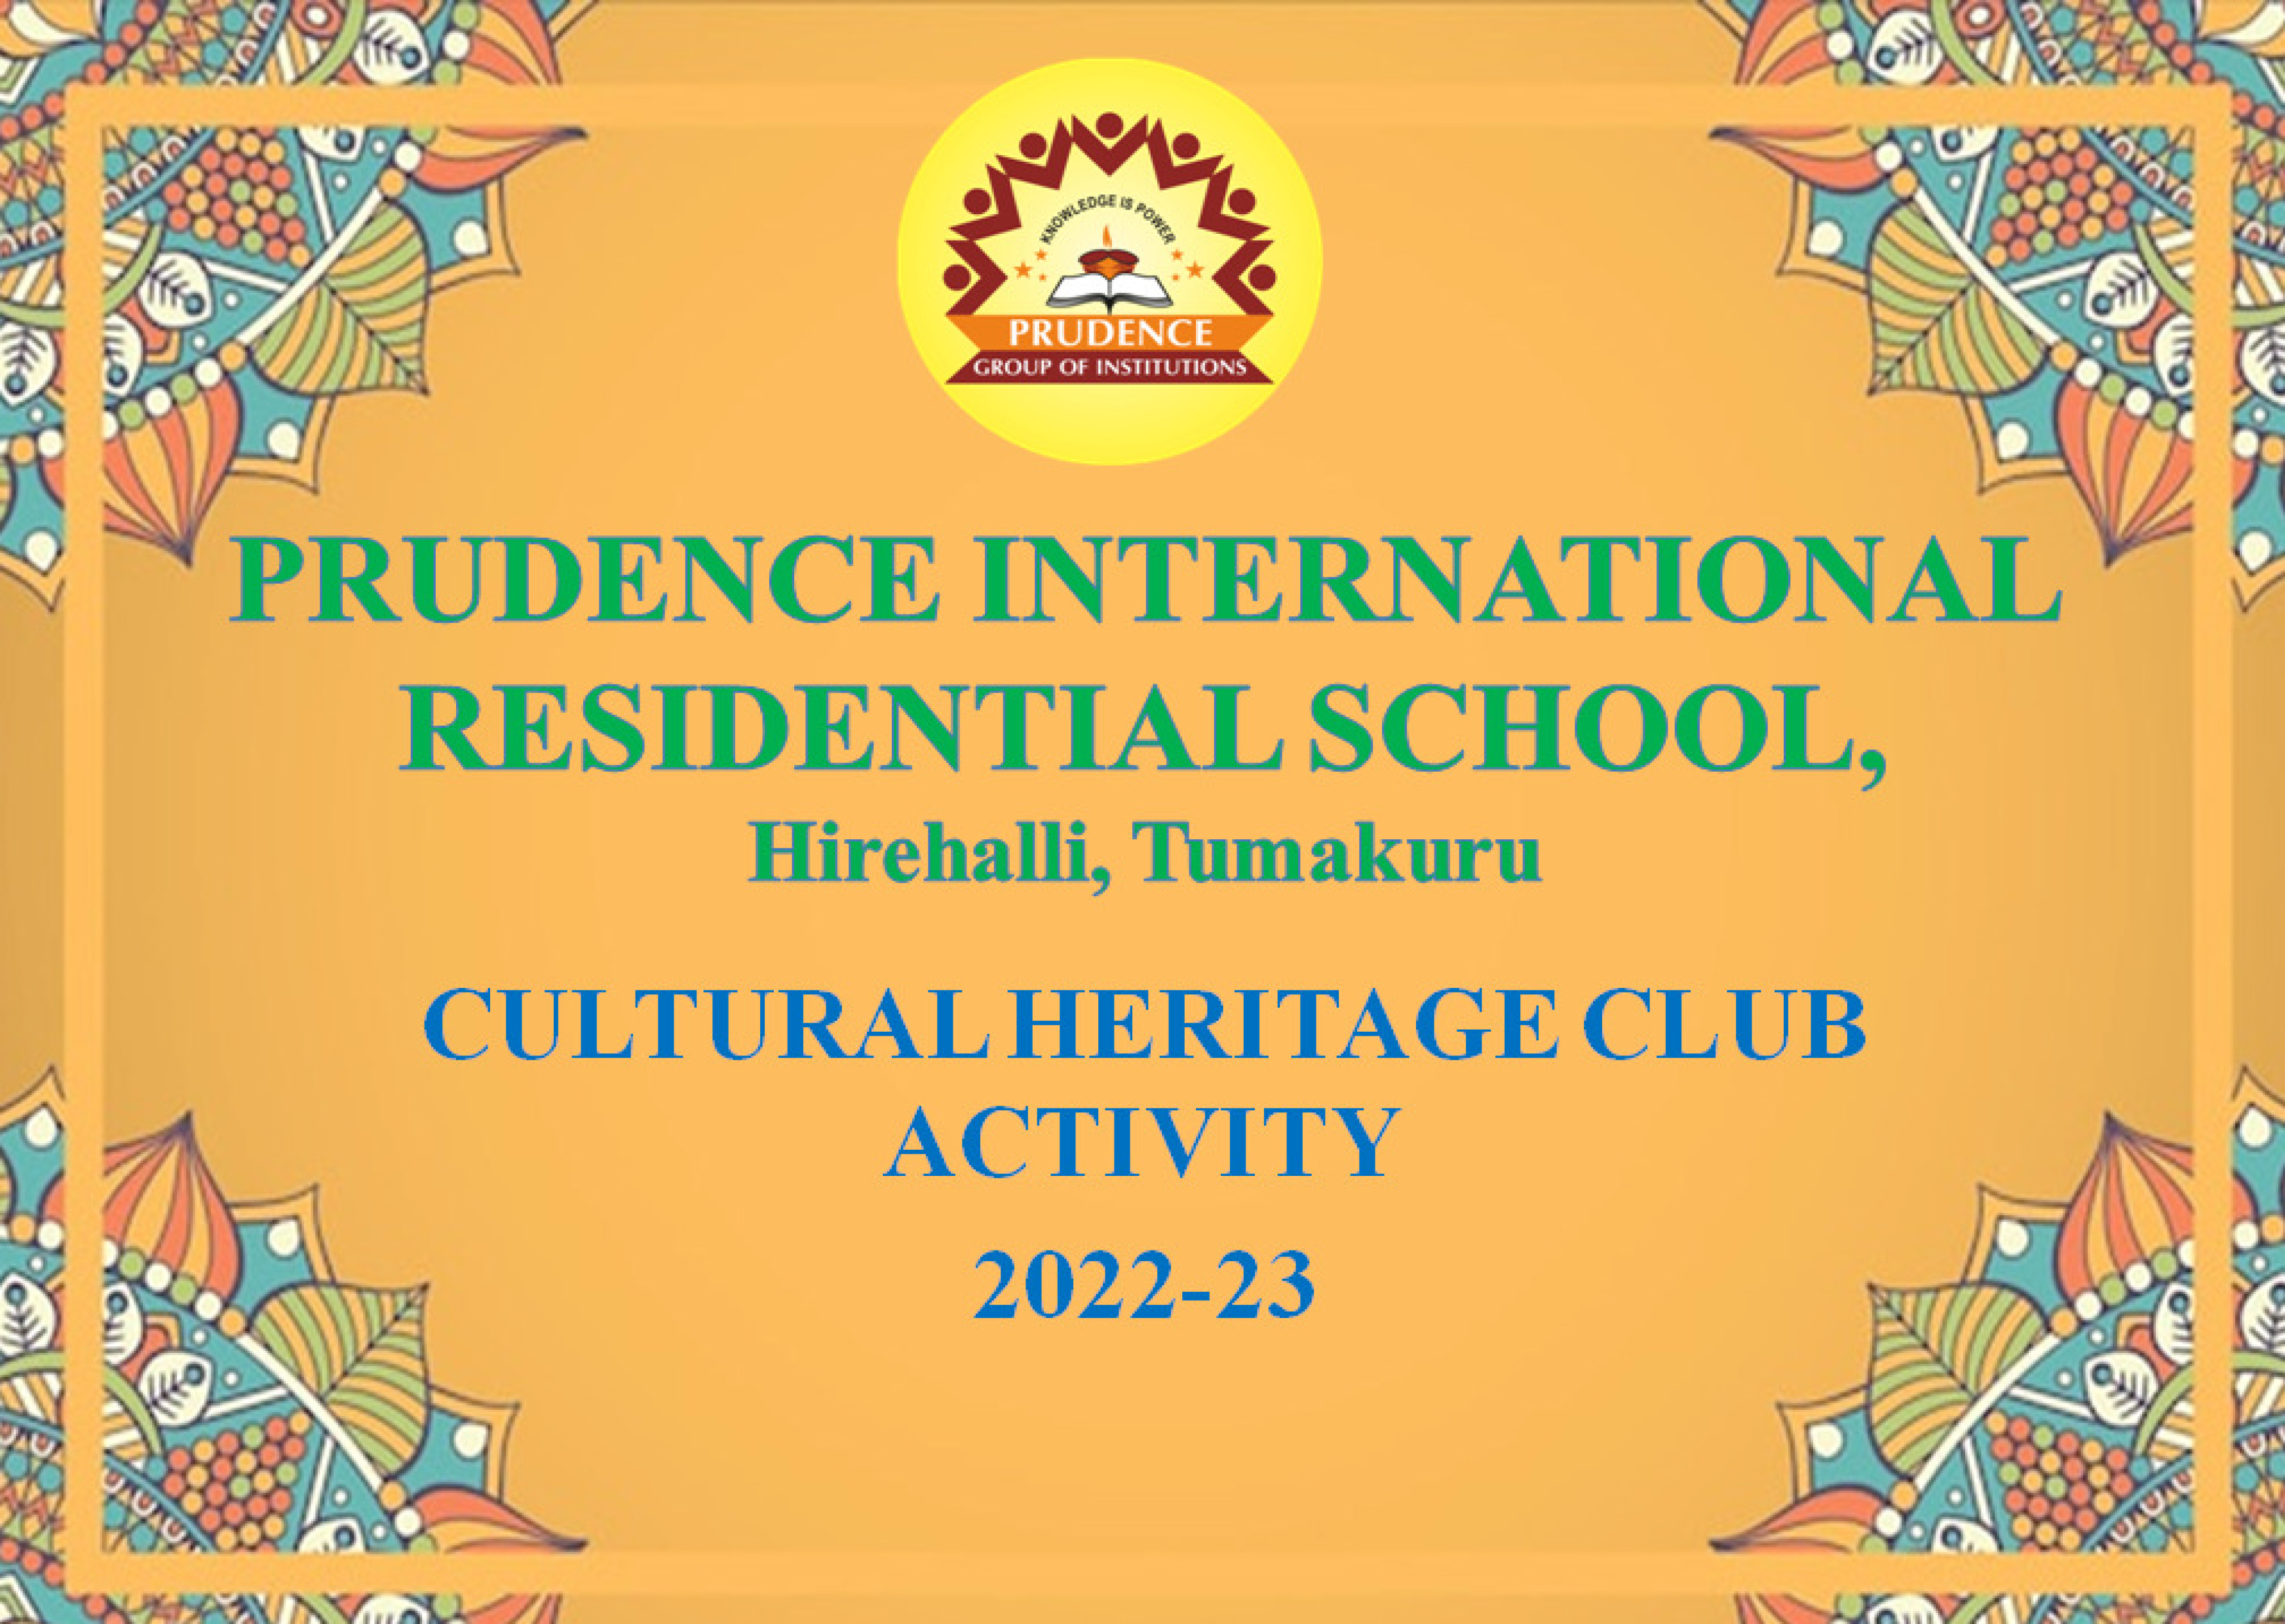 Prudence Heritage Club